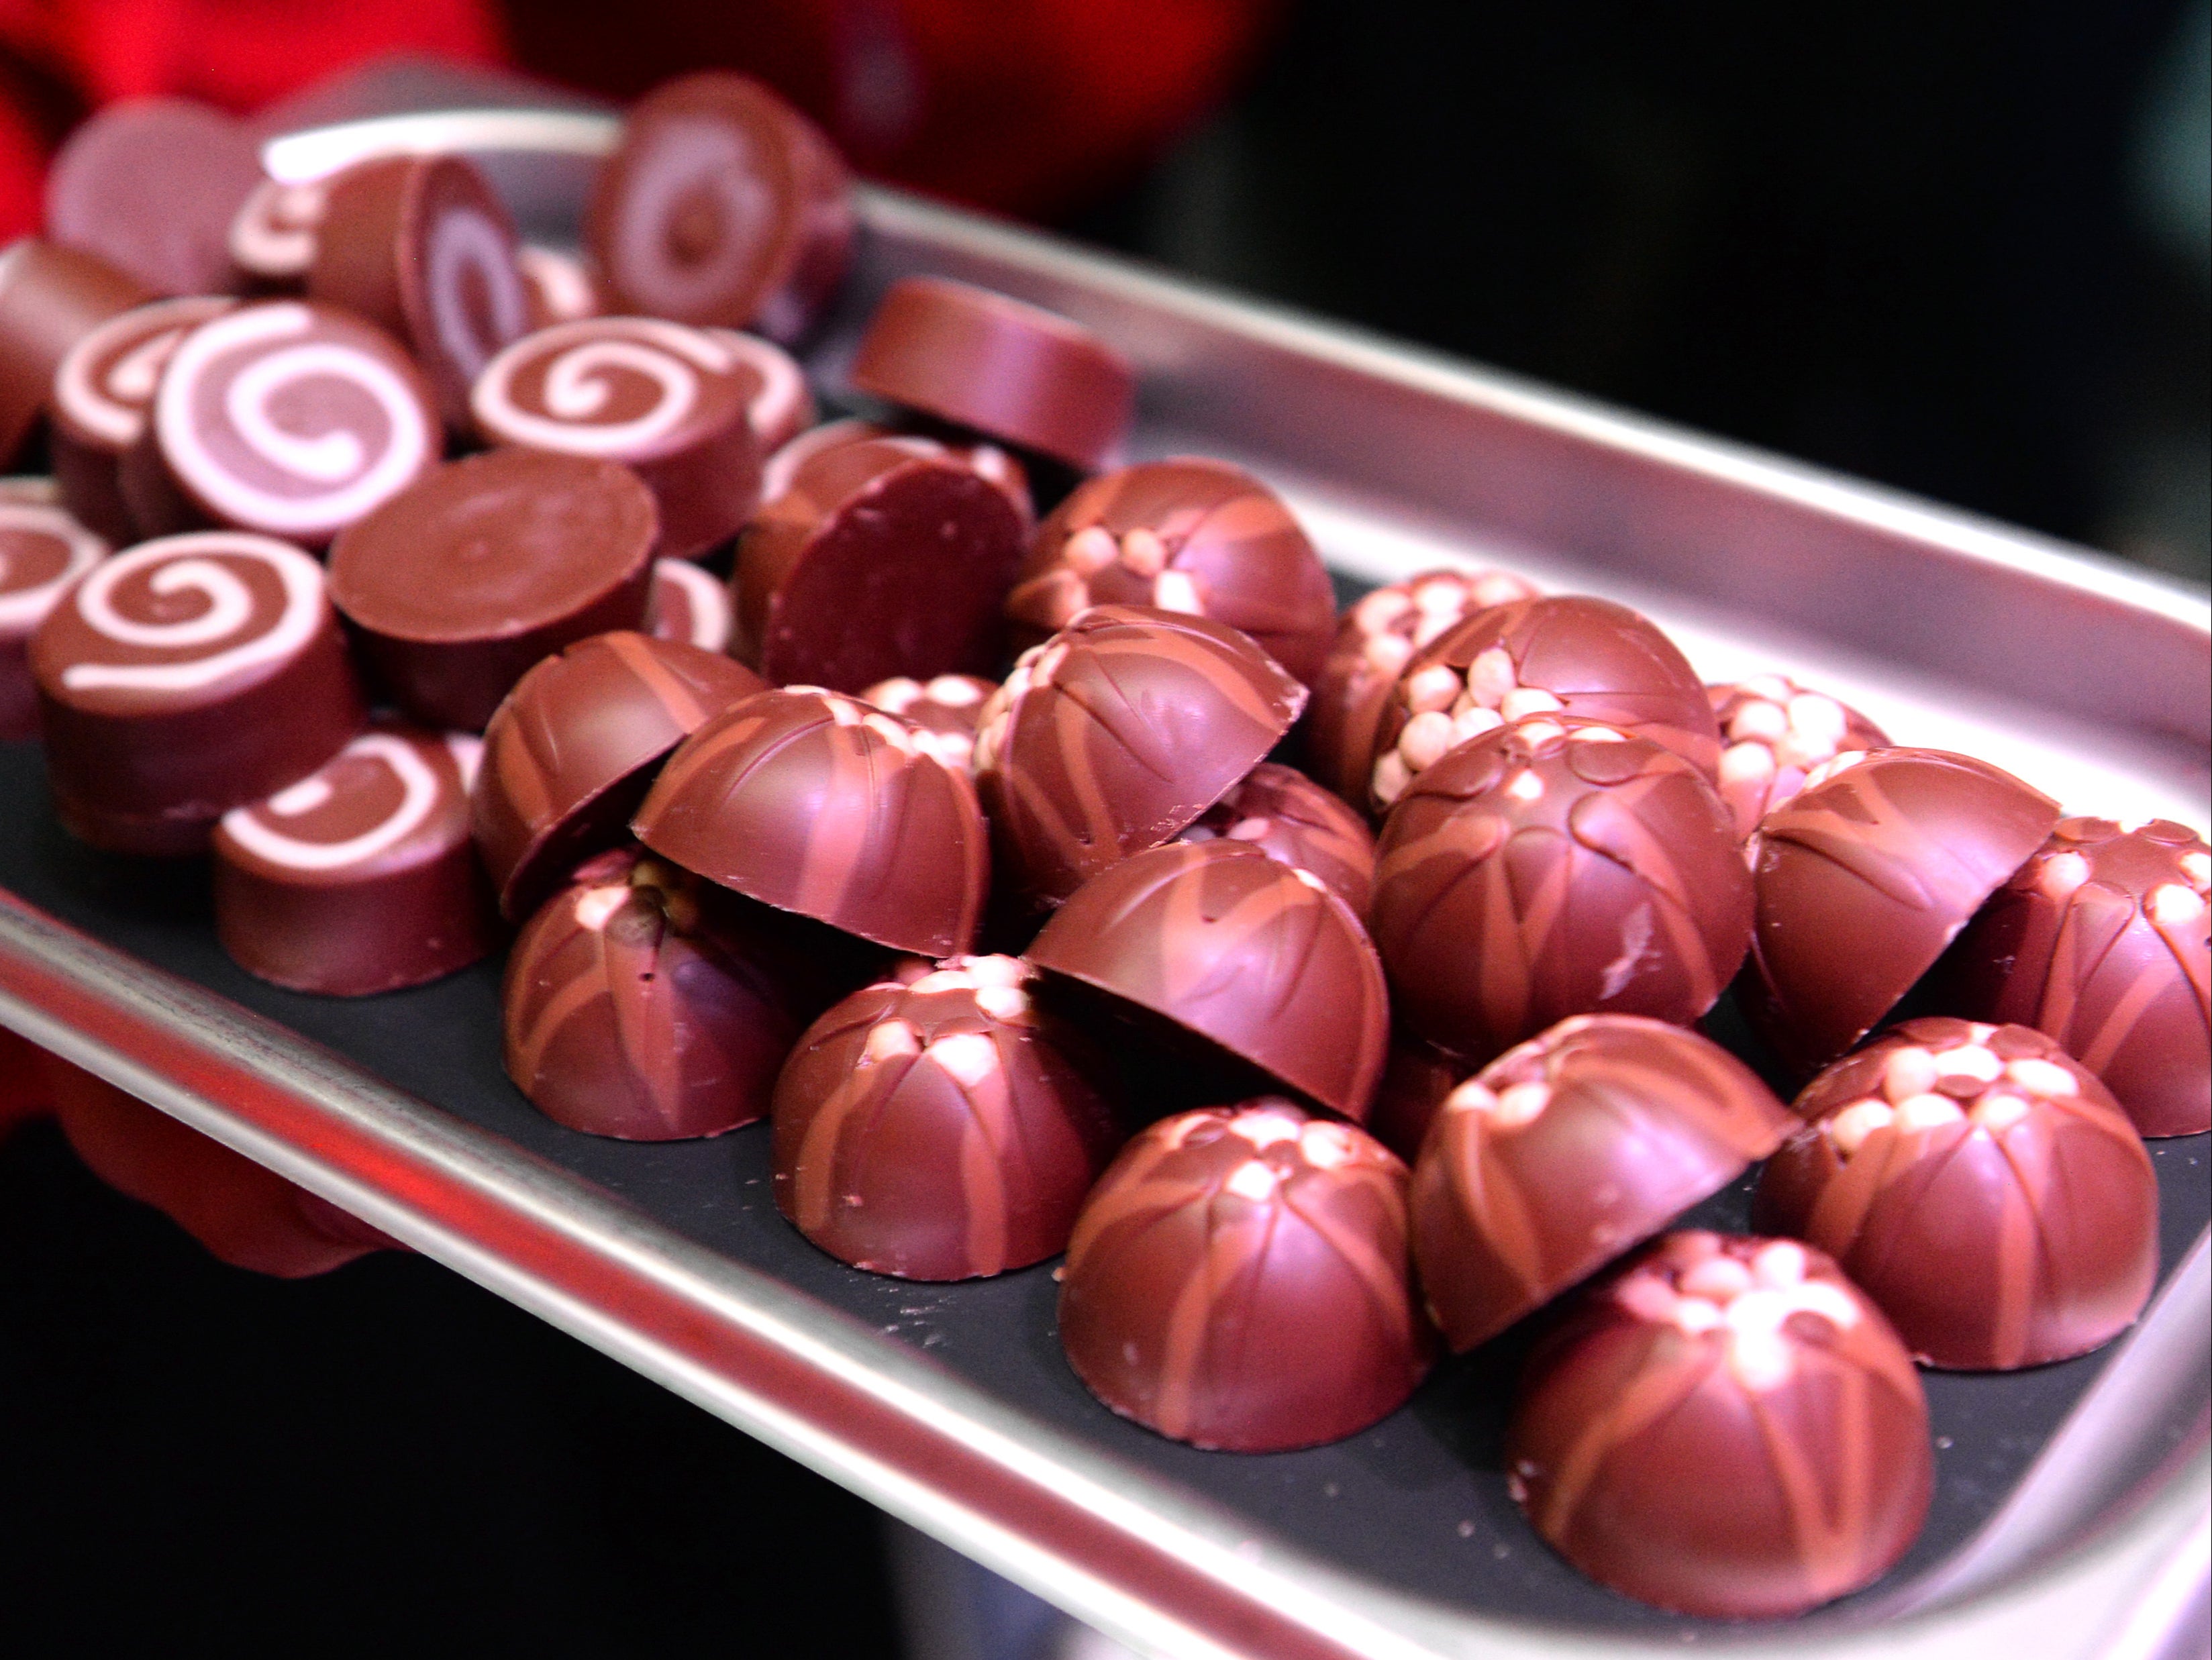 Hotel Chocolat chocolates